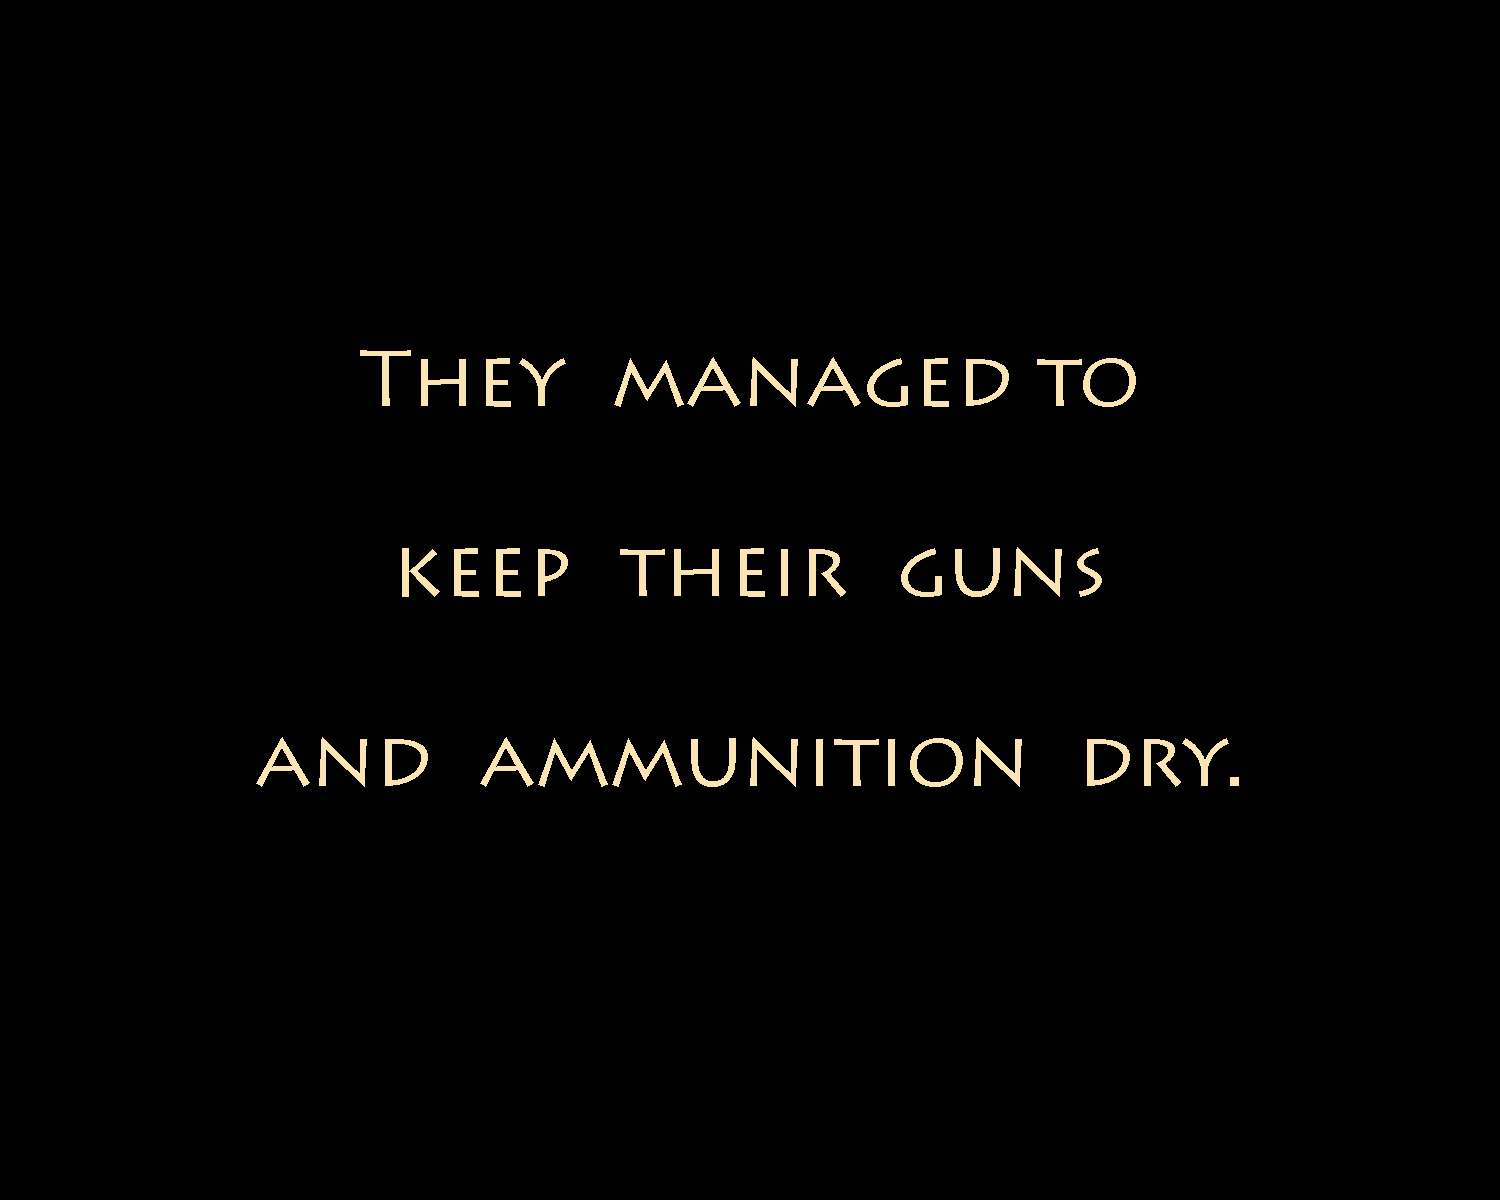 Ammunition dry.